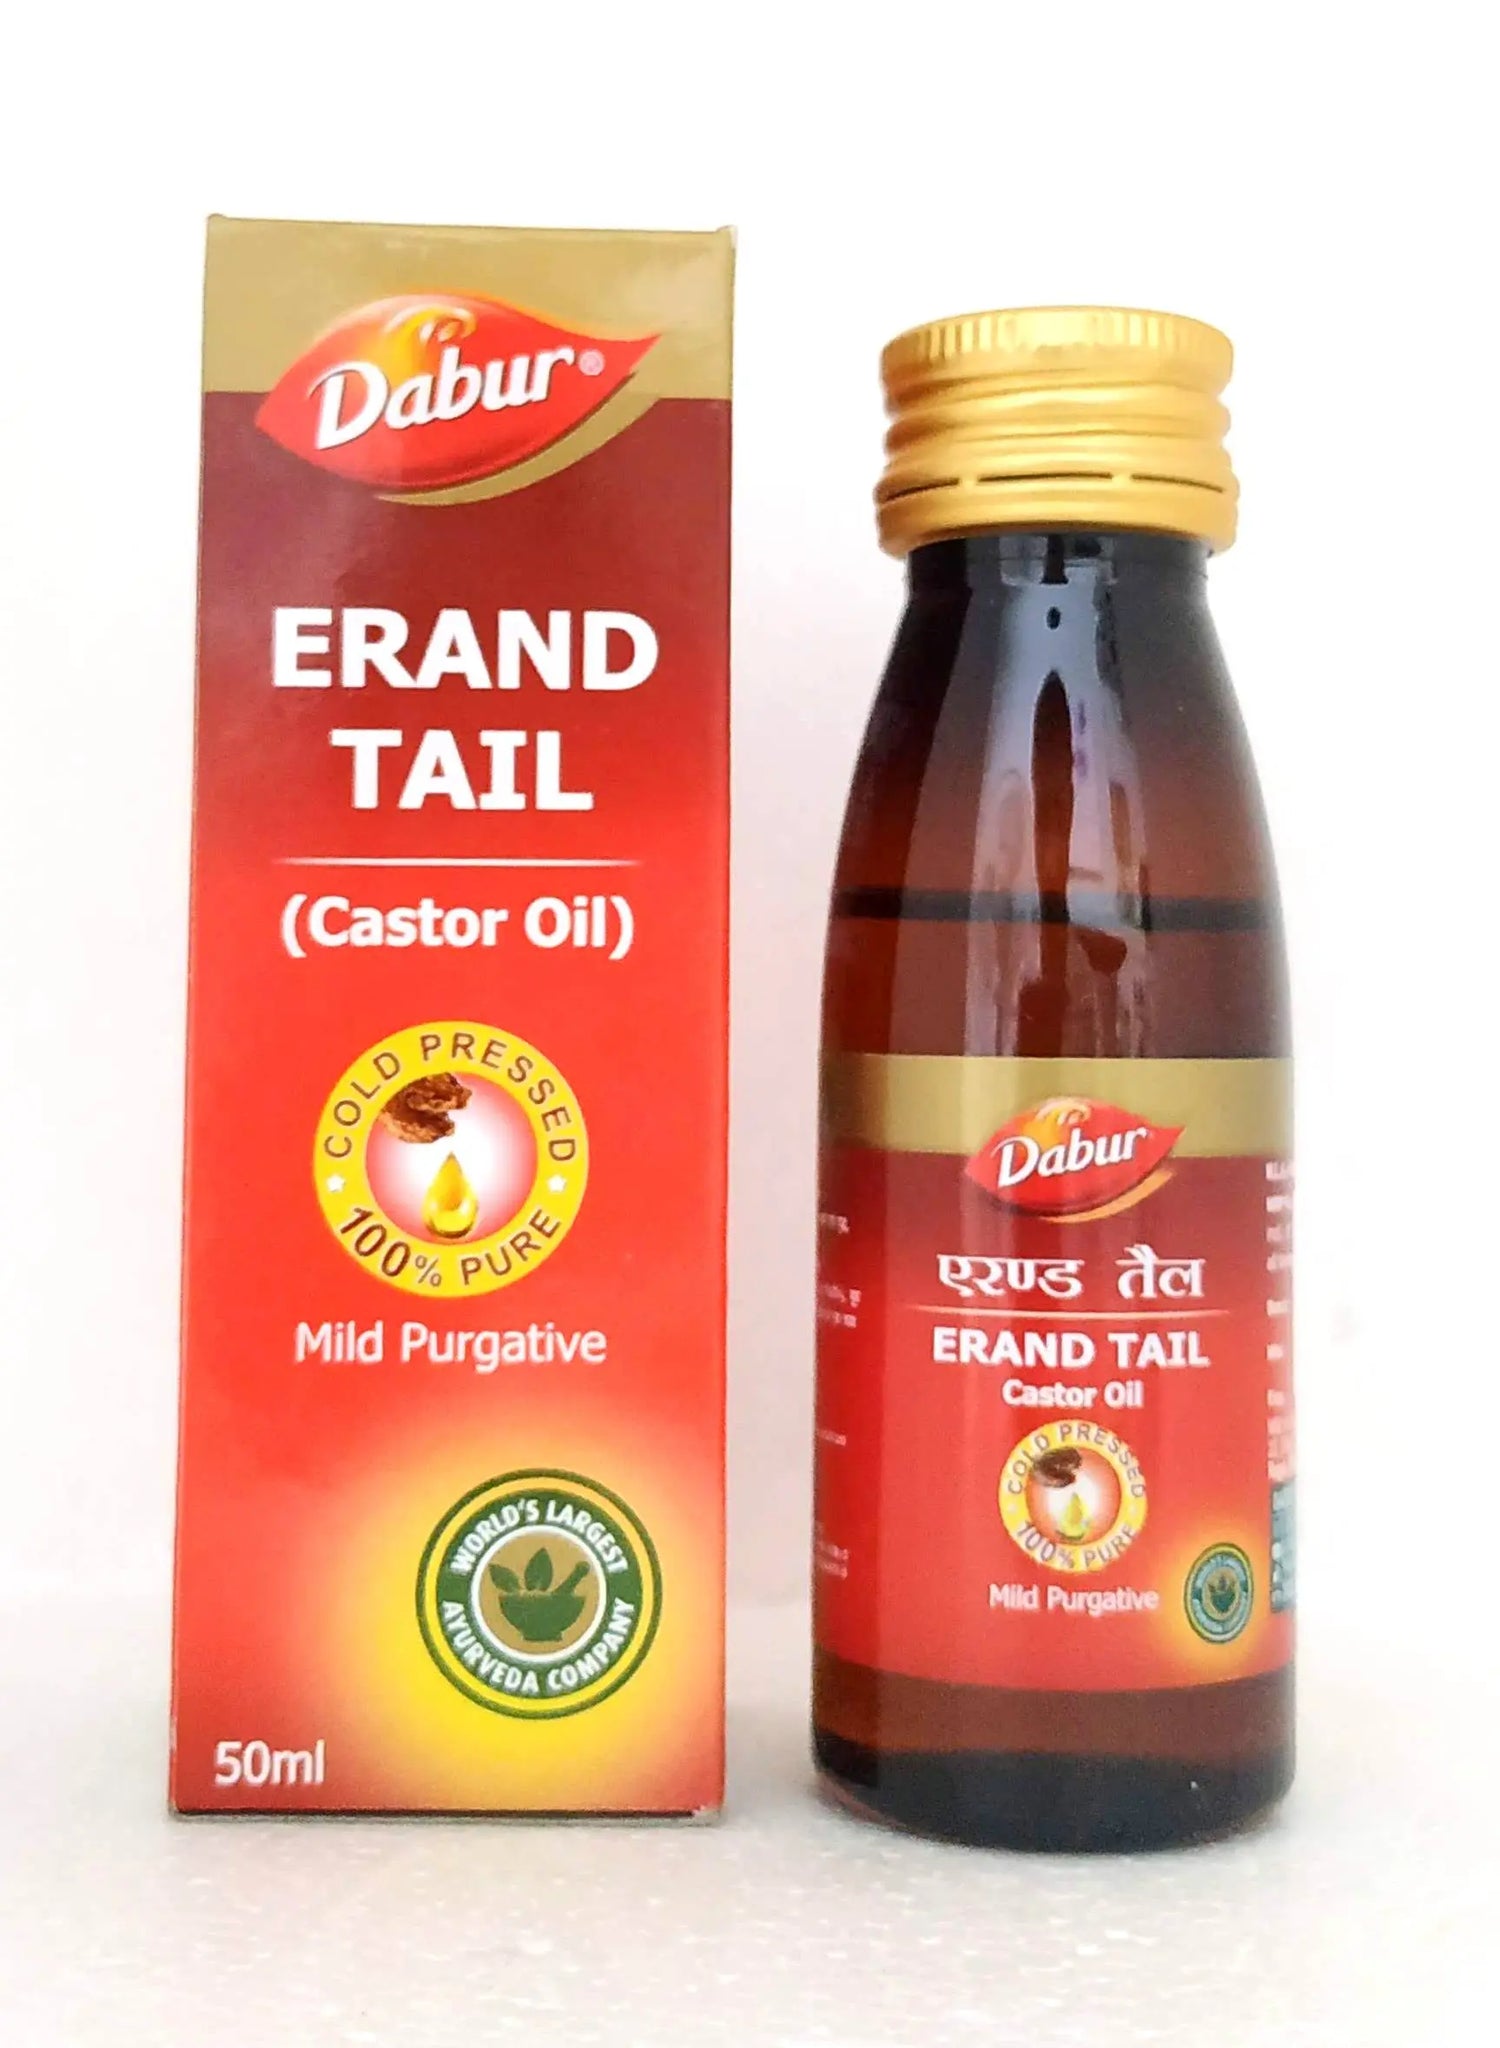 Erand tail - Castor oil 50ml Dabur